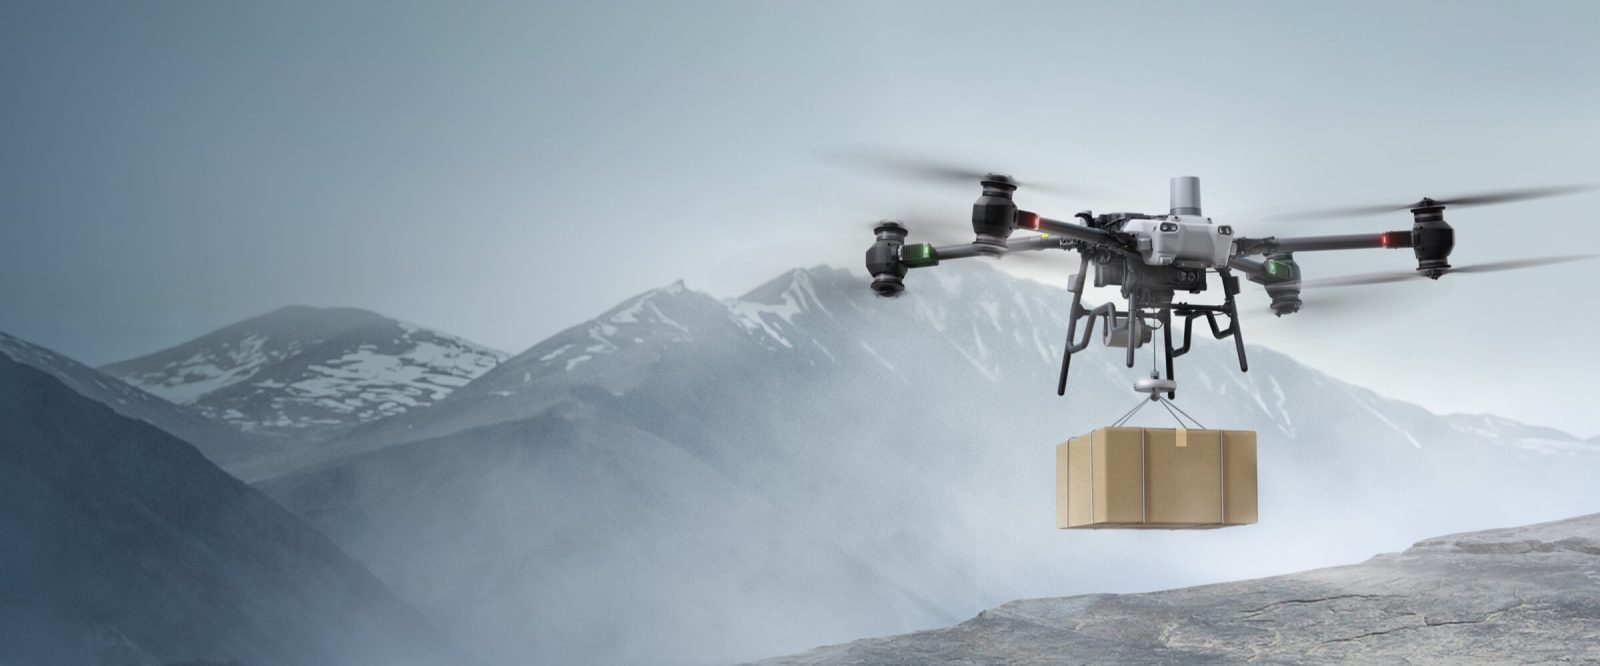 uk drone delivery dji bvlos flights